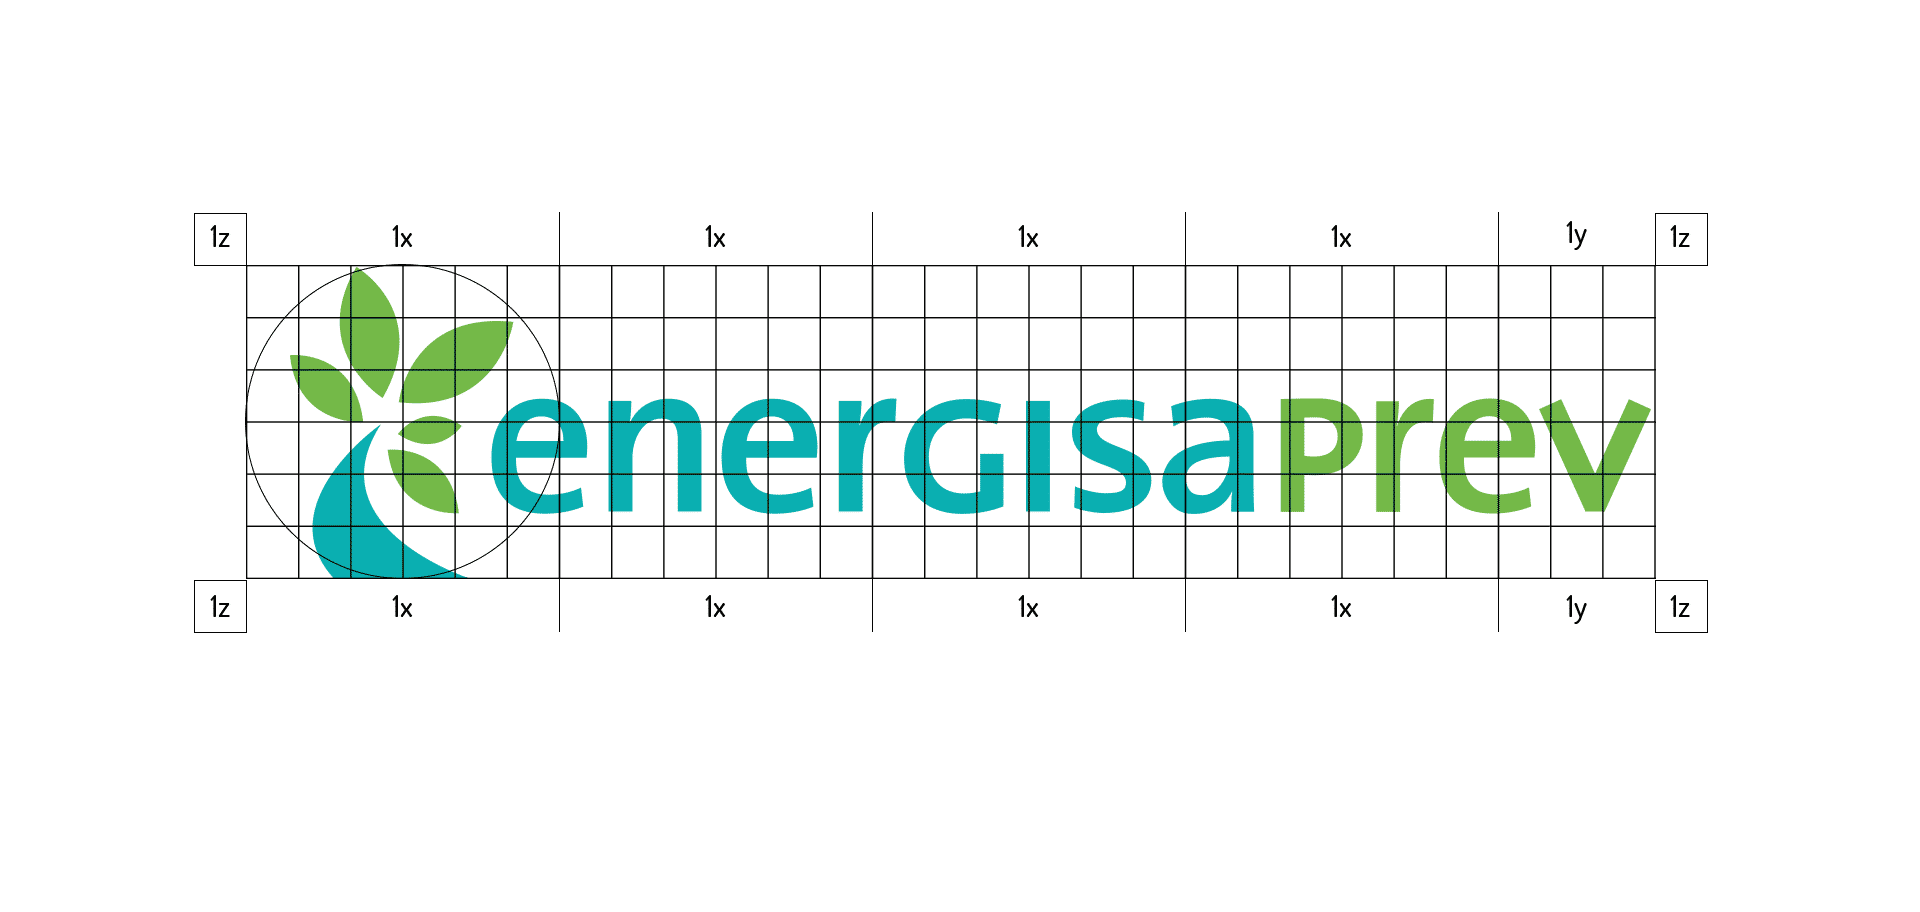 energisaprev_grid